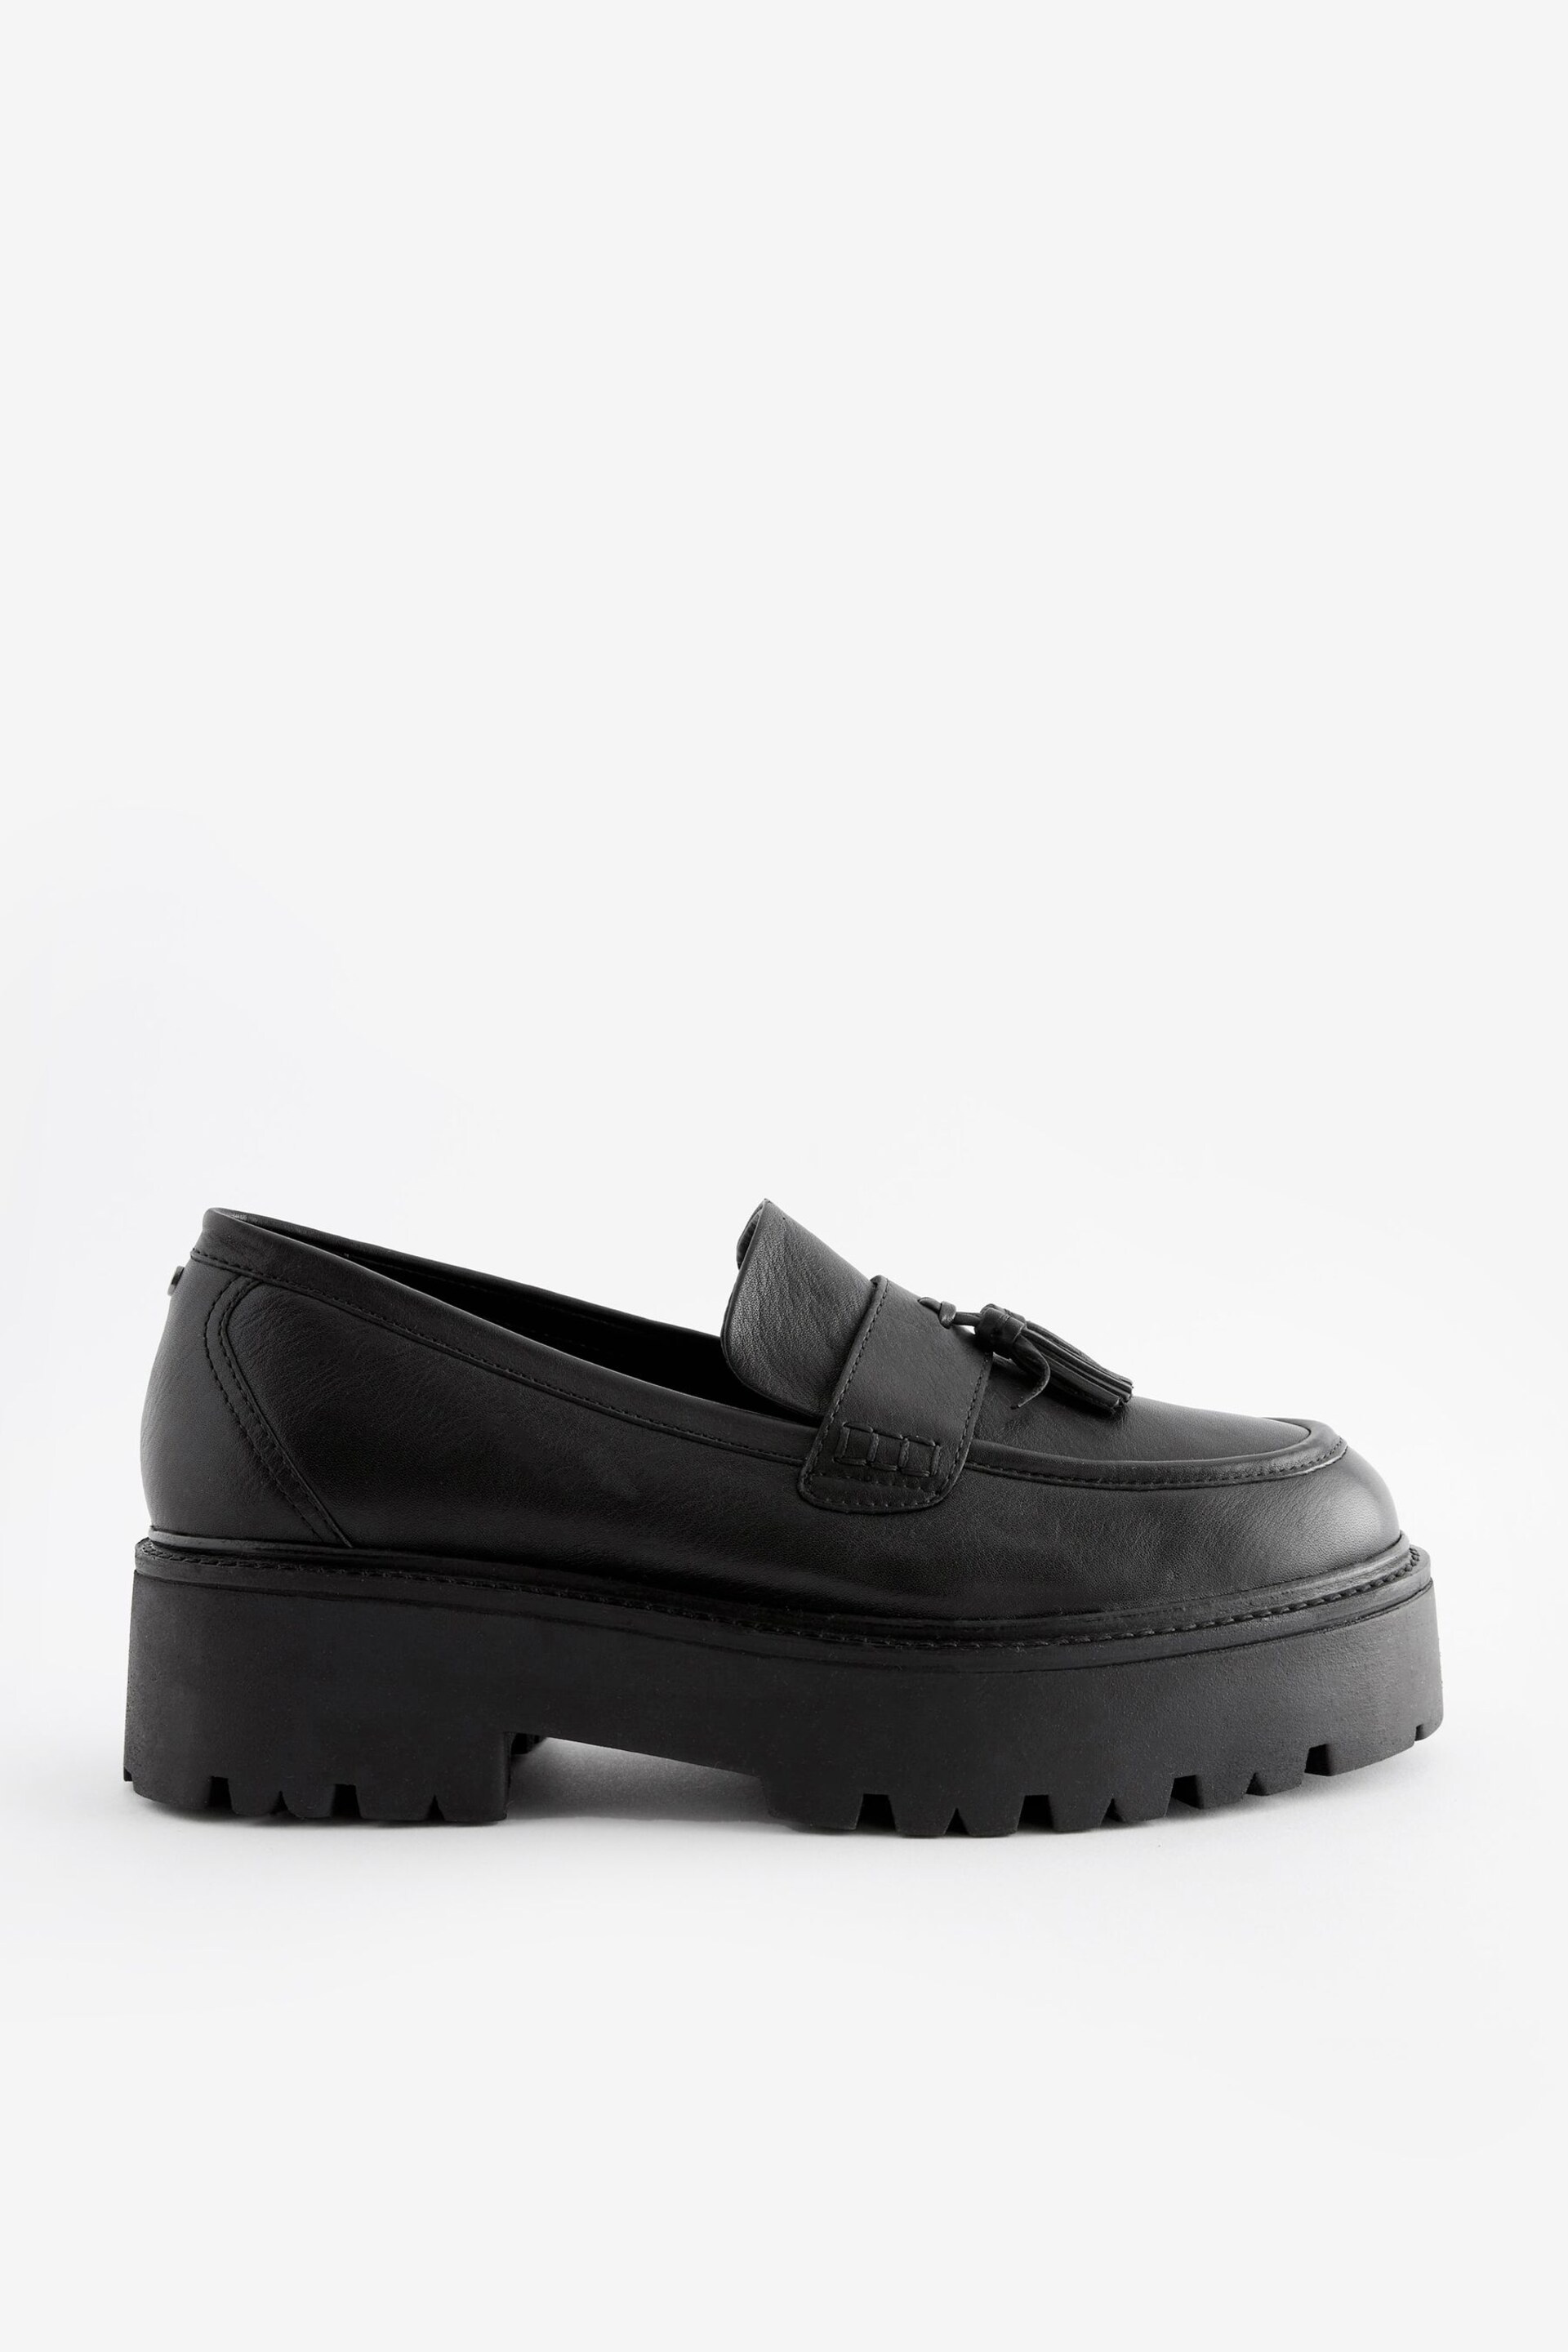 Black Signature Leather Chunky Tassel Loafers - Image 6 of 10